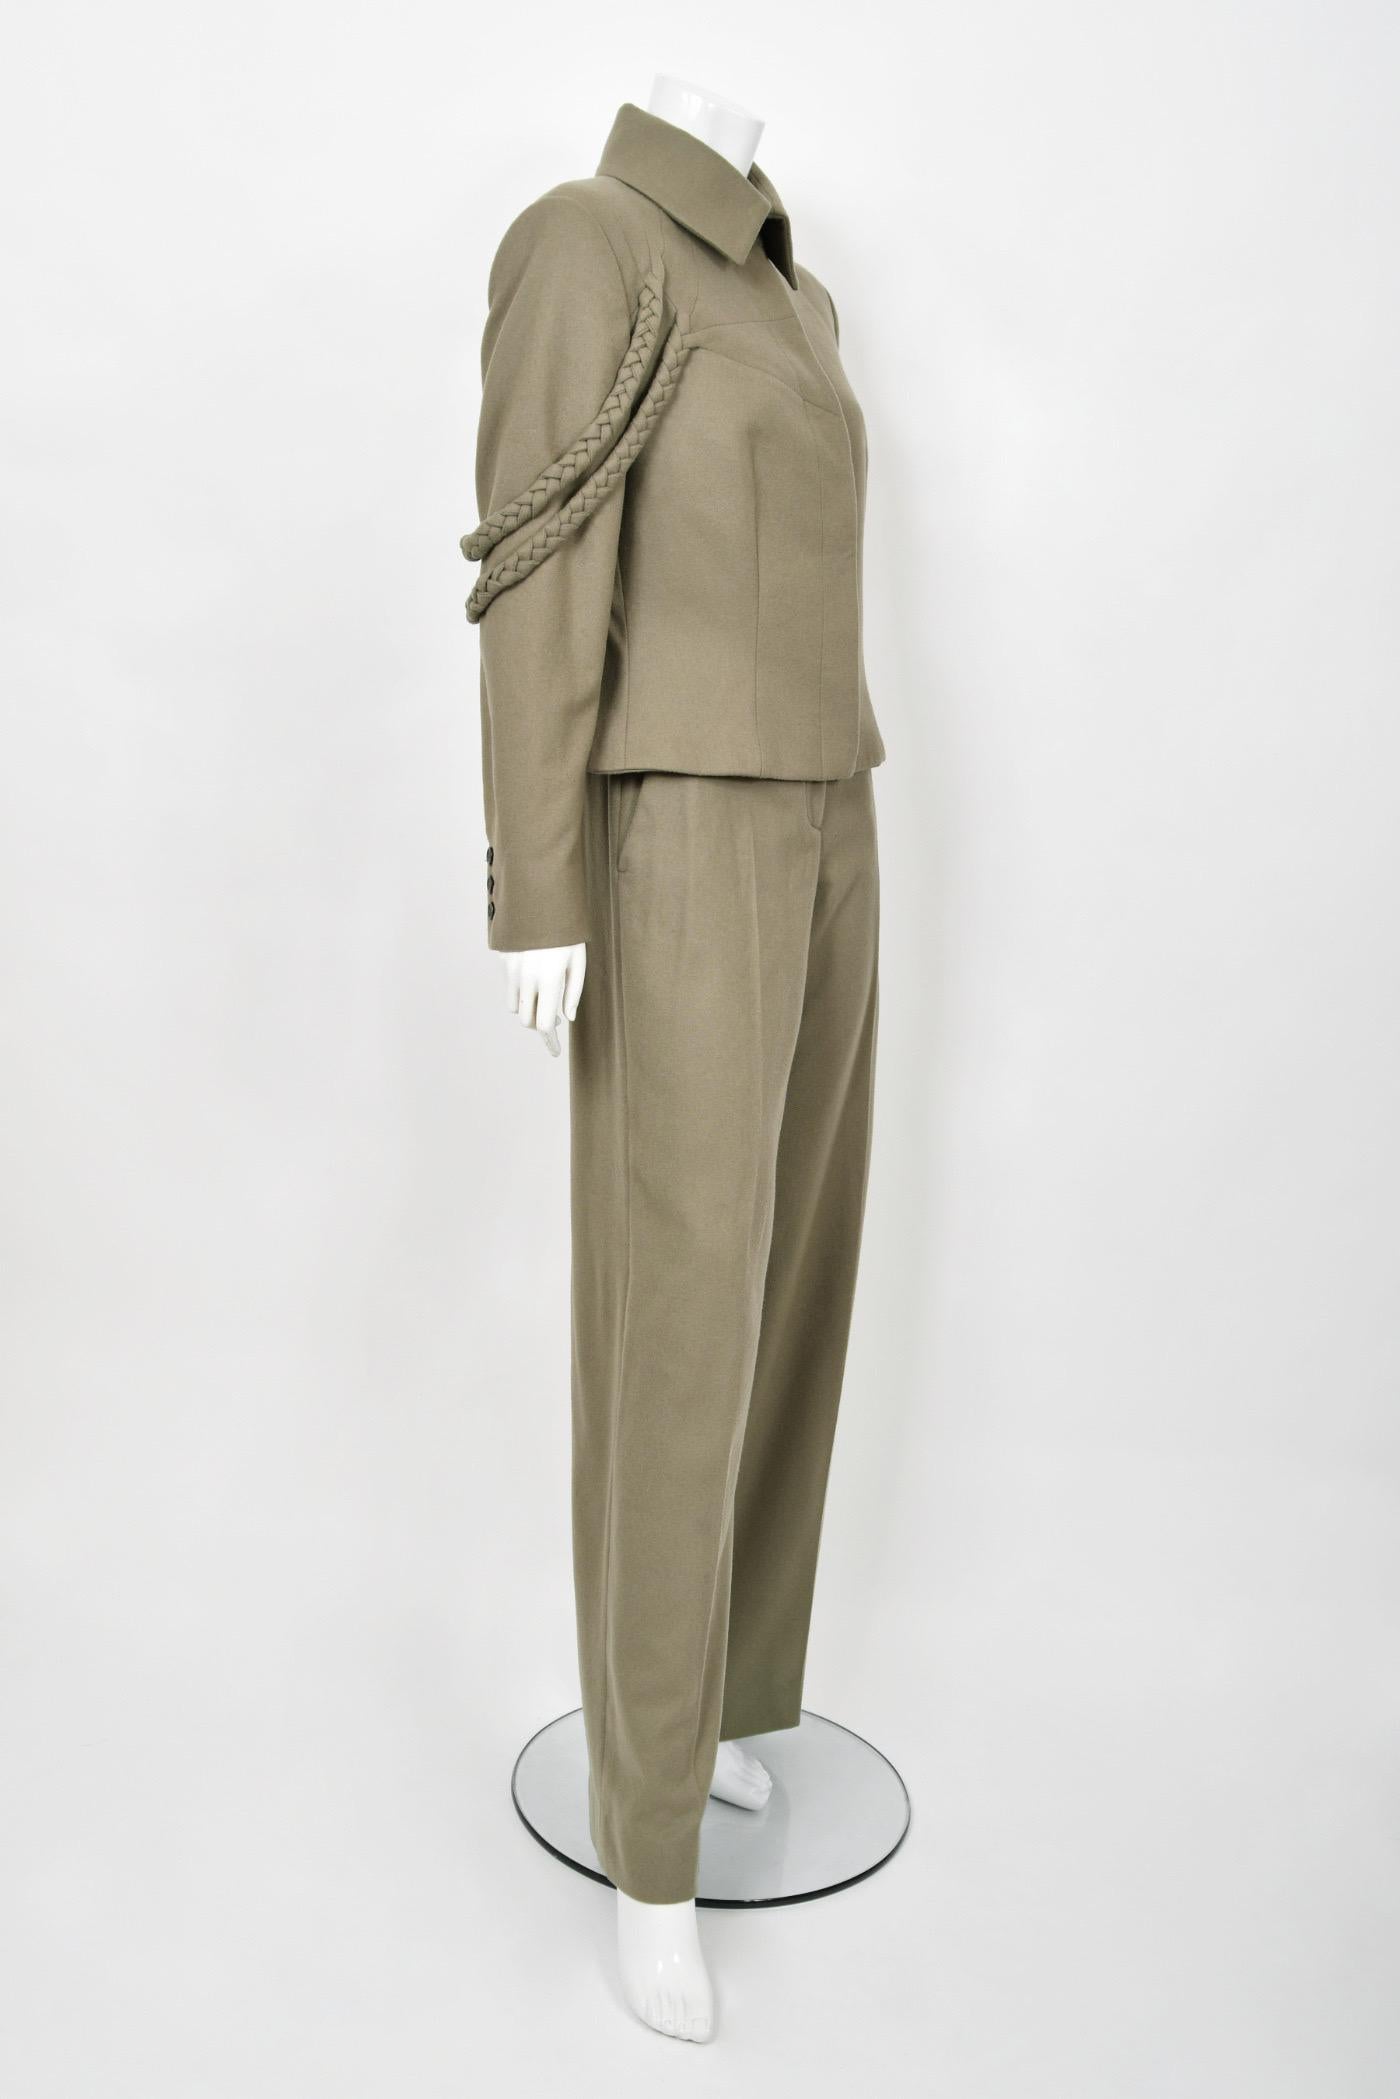 2001 Alexander McQueen Documented Runway Moss-Green Wool Braided Jacket Pantsuit For Sale 5